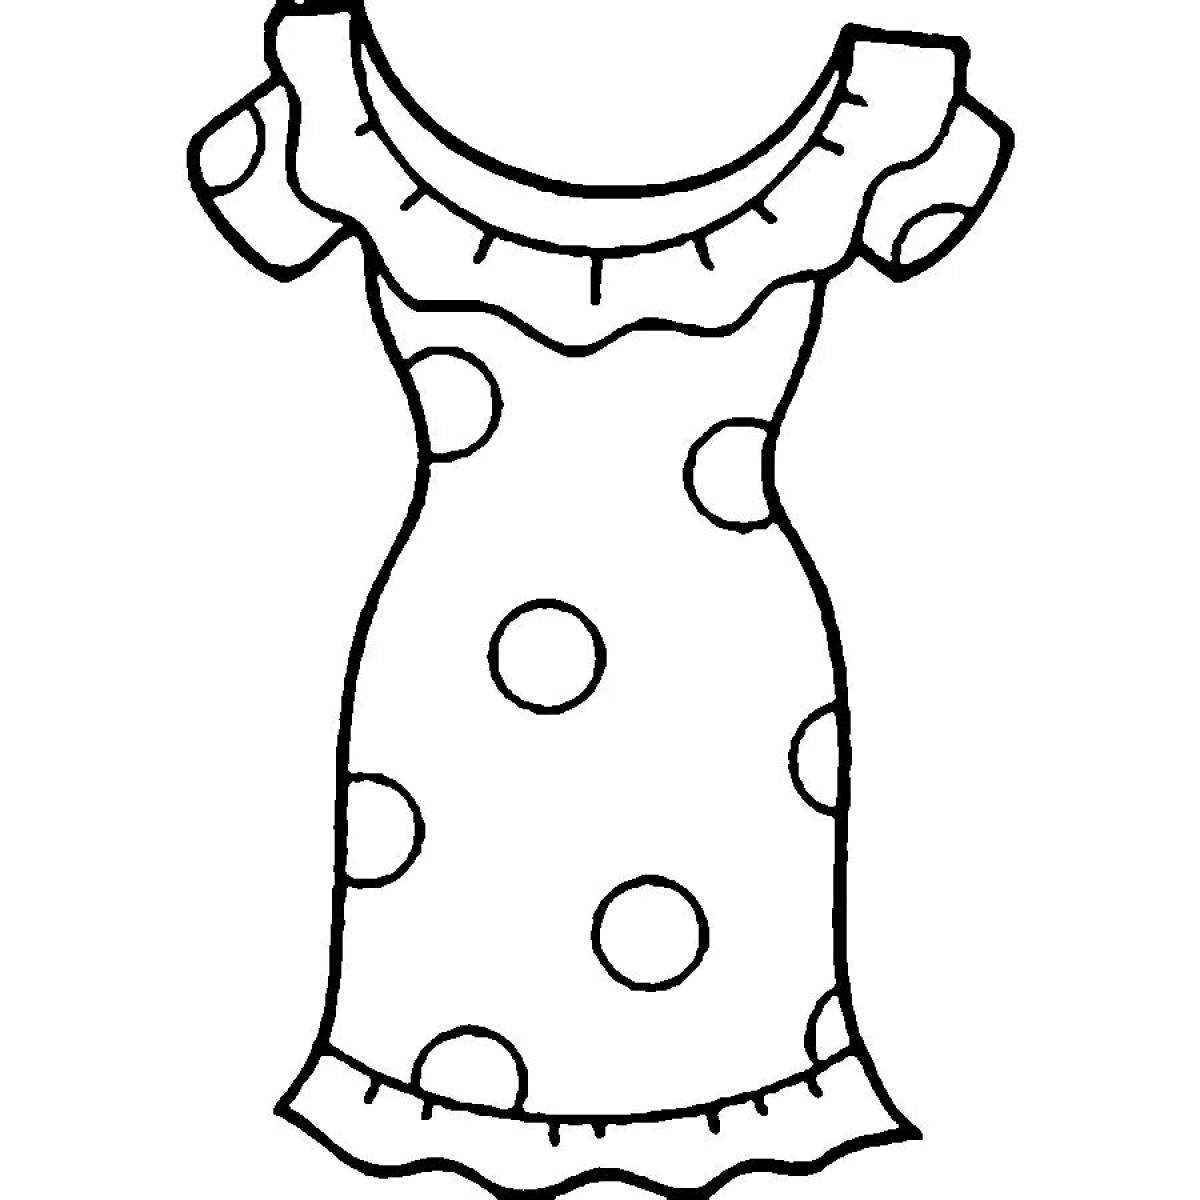 Mother's dress #2